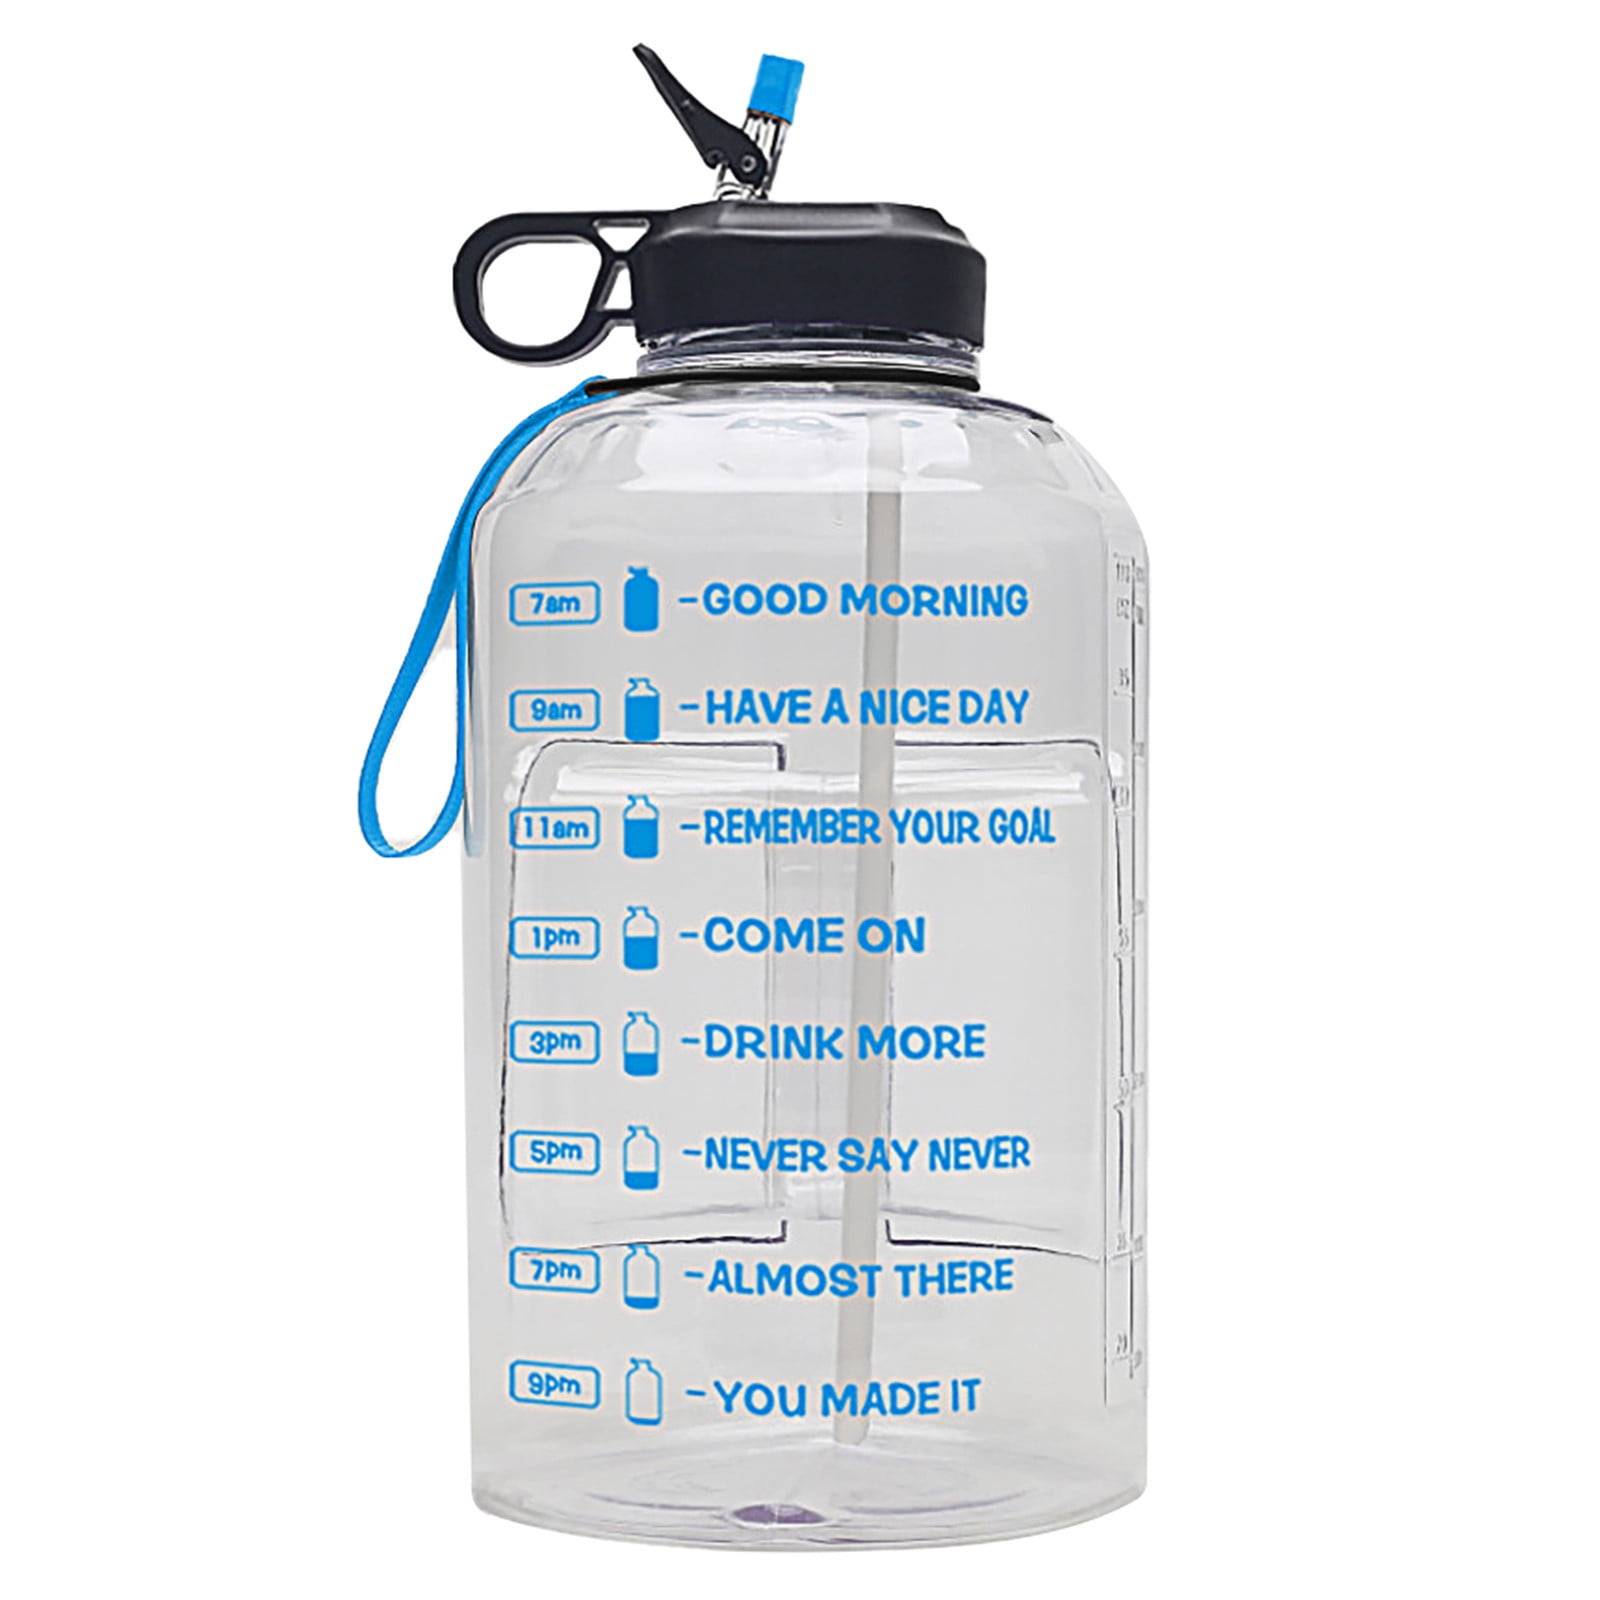 Mason Jar Water Bottles: For Any Activity · Mason Jar Lifestyle